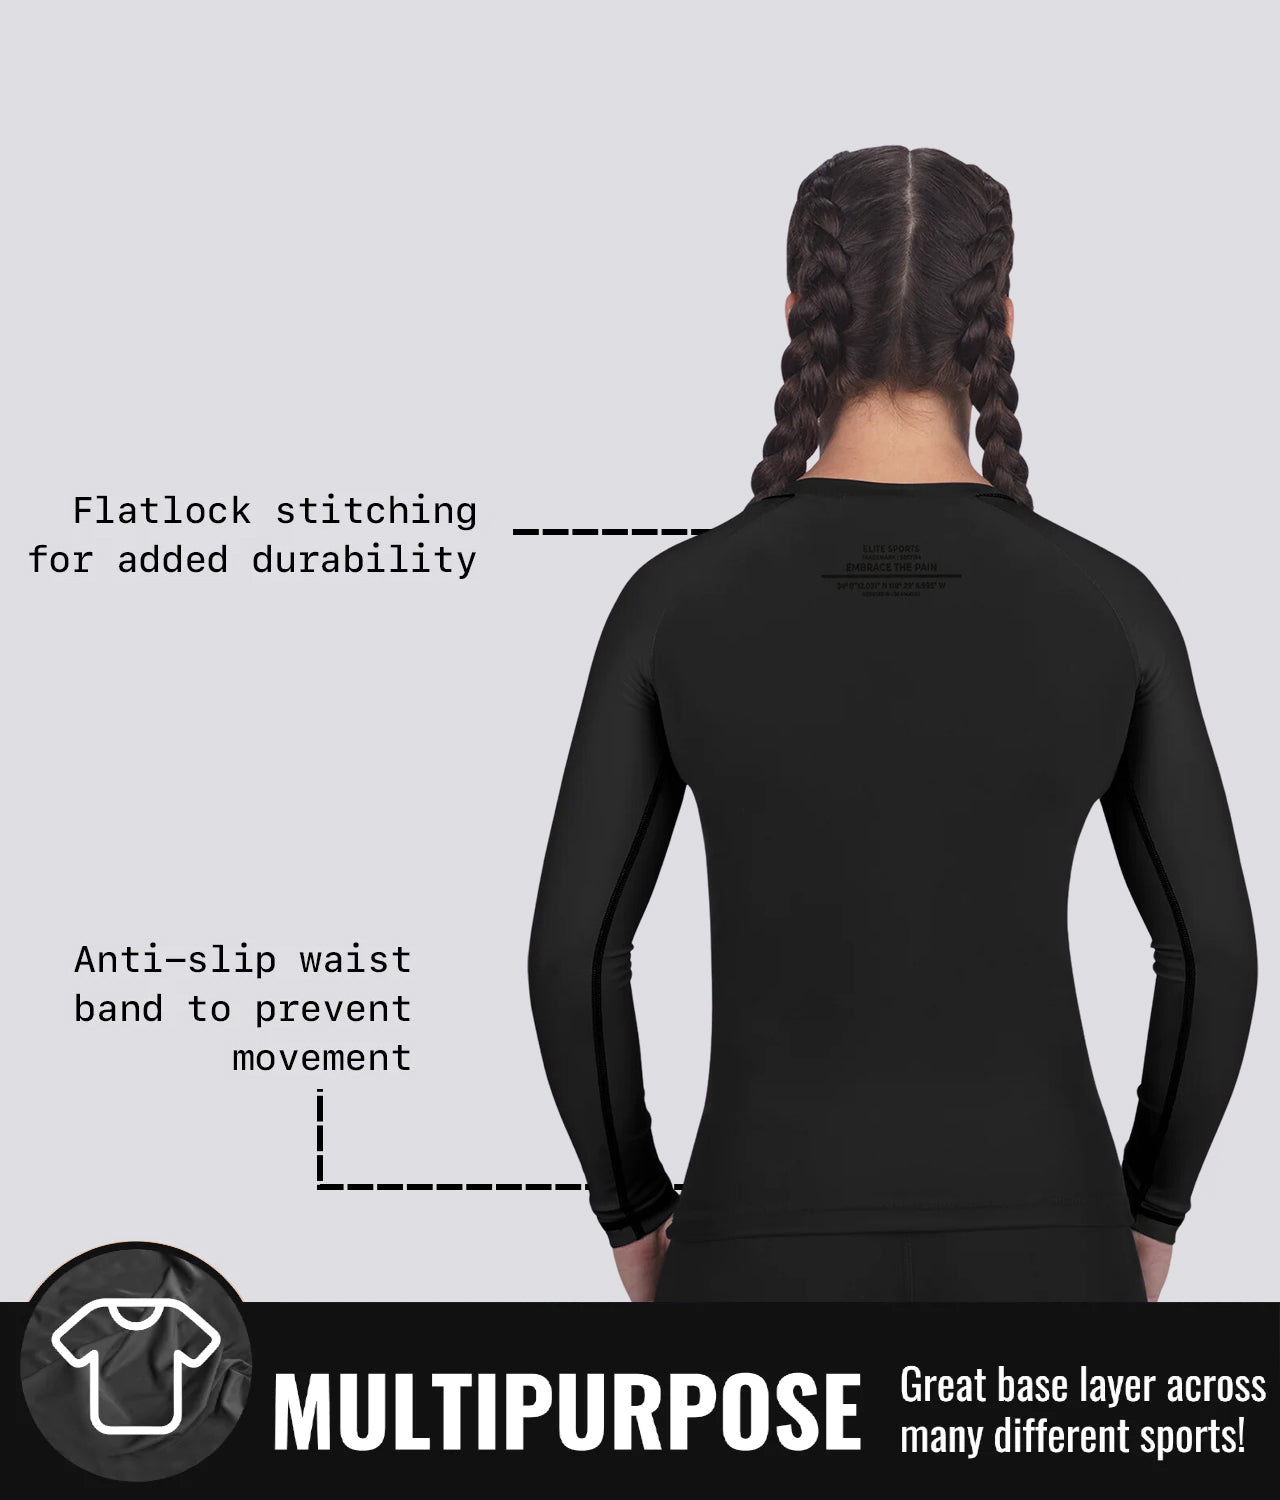 Elite Sports Women's Standard Black Long Sleeve Jiu Jitsu BJJ Rash Guard